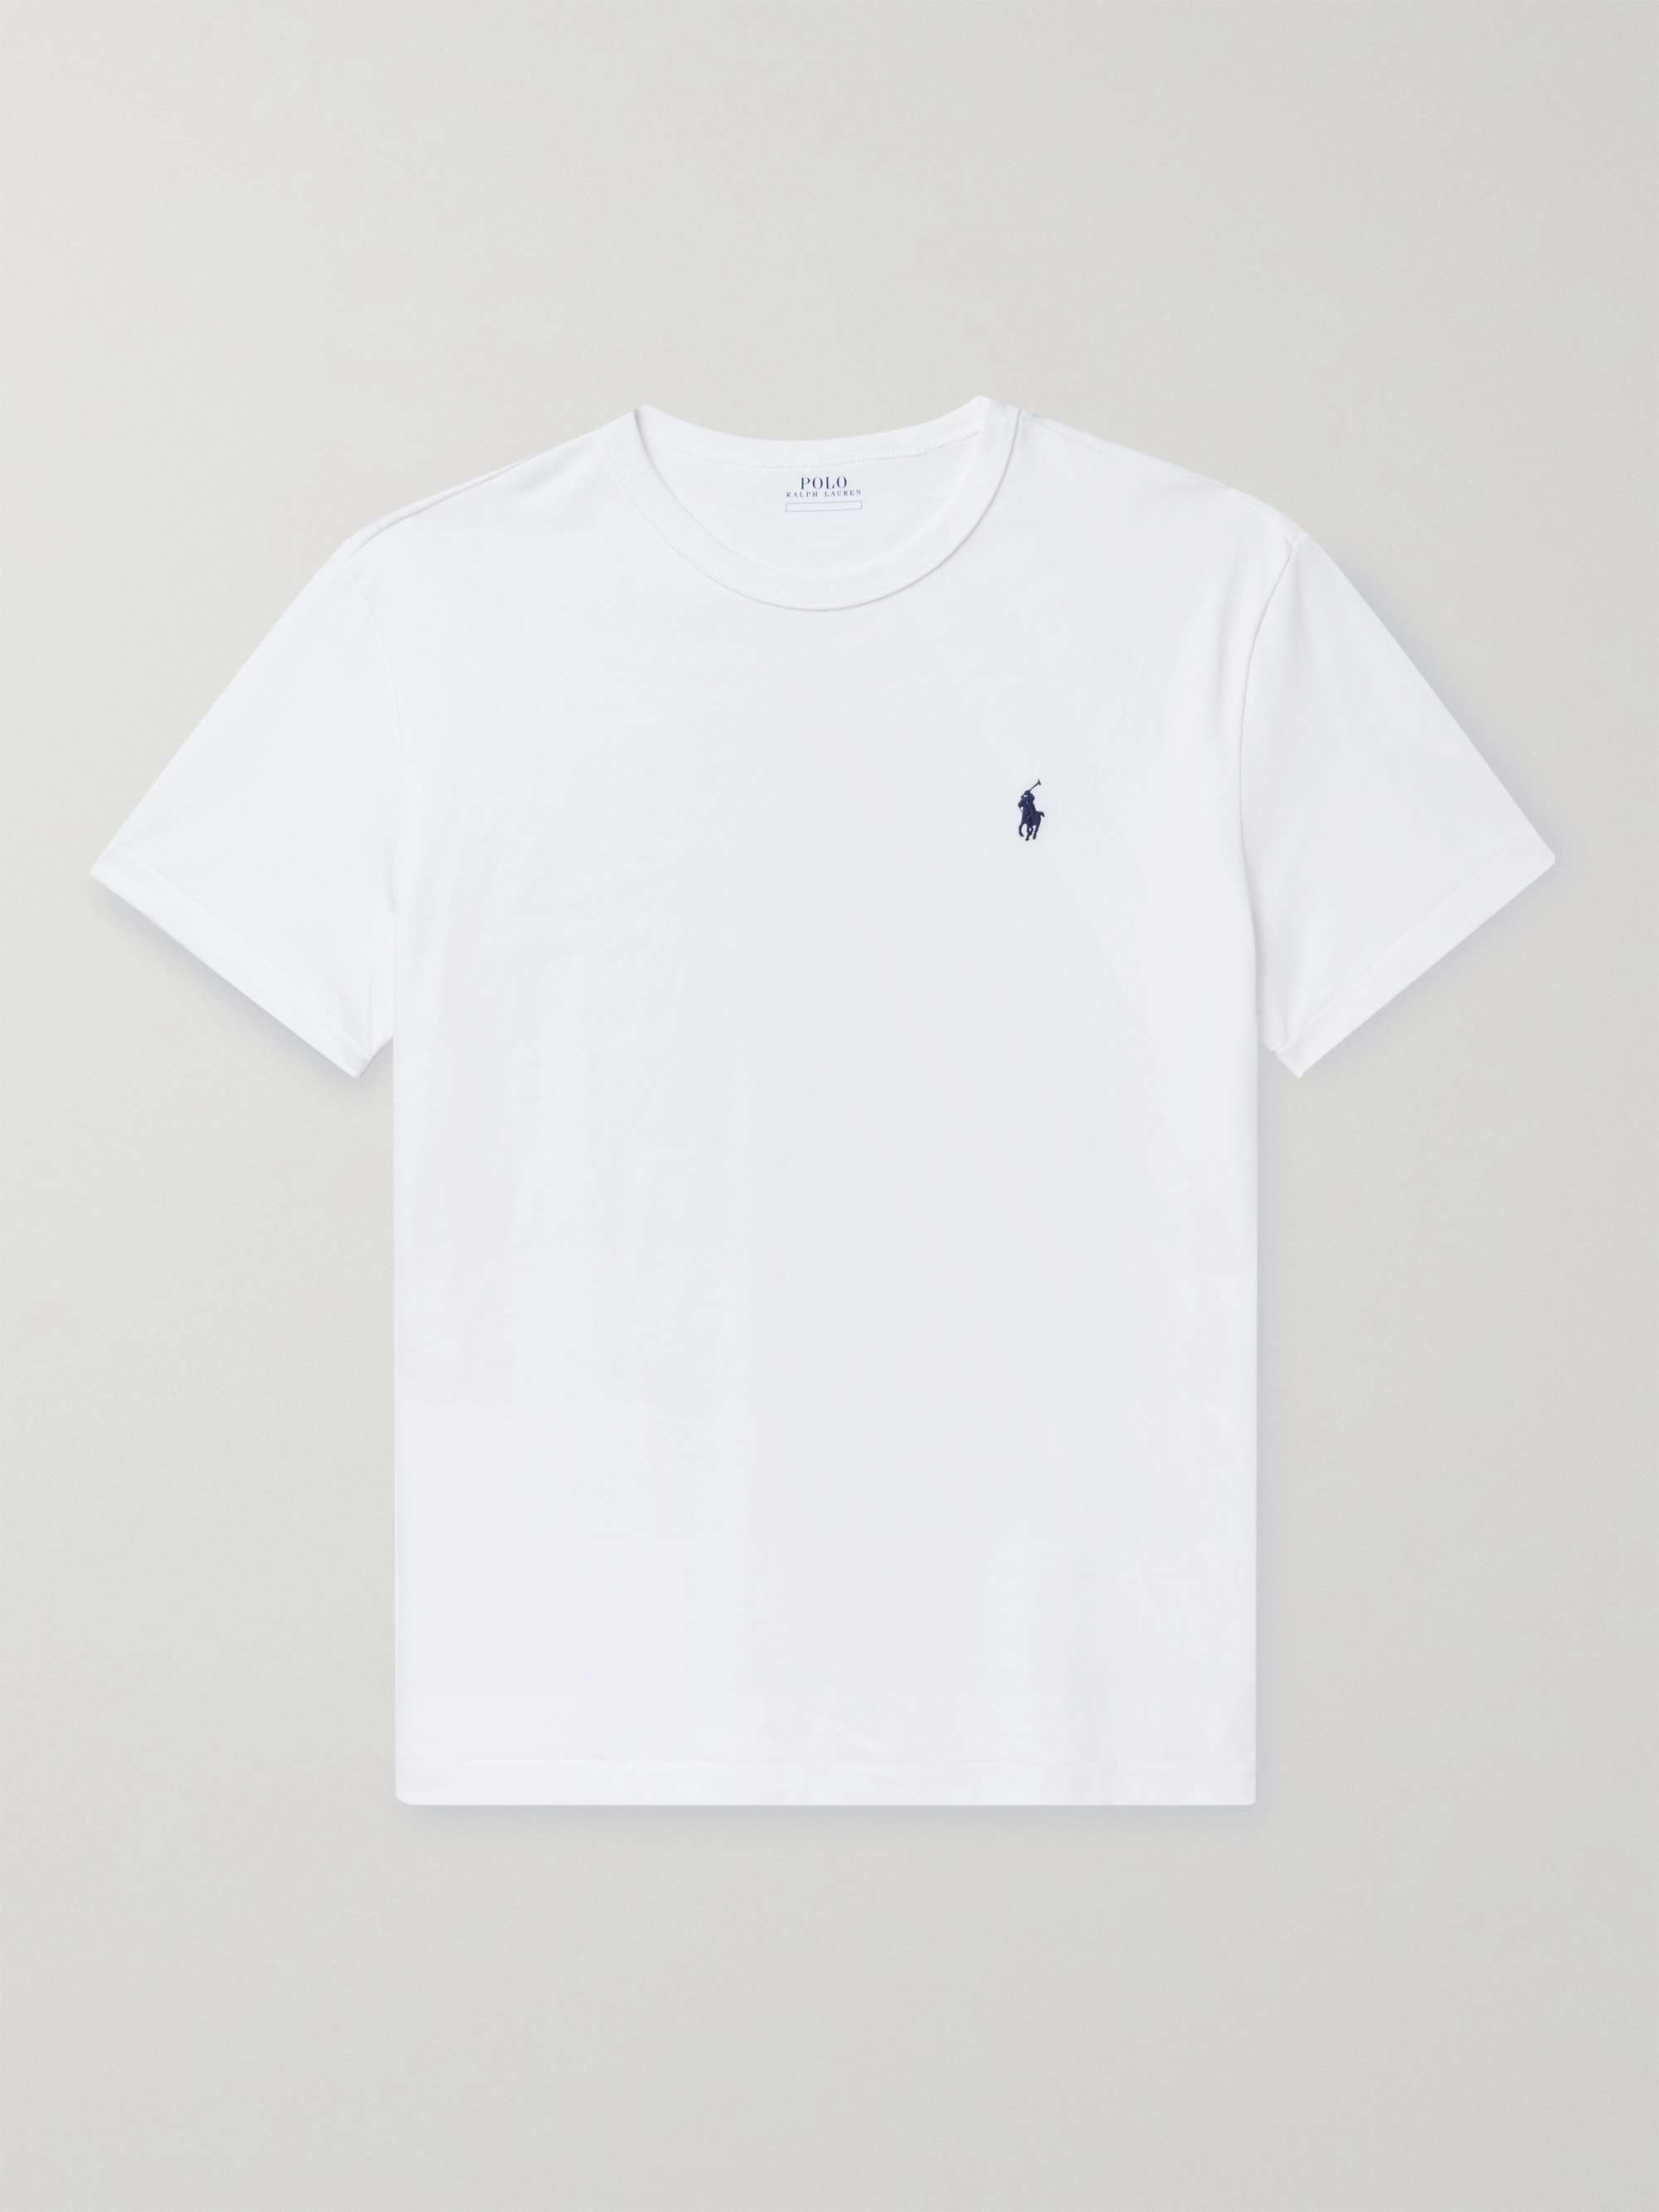 White Logo-Embroidered Cotton-Jersey T-Shirt | POLO RALPH LAUREN | MR PORTER